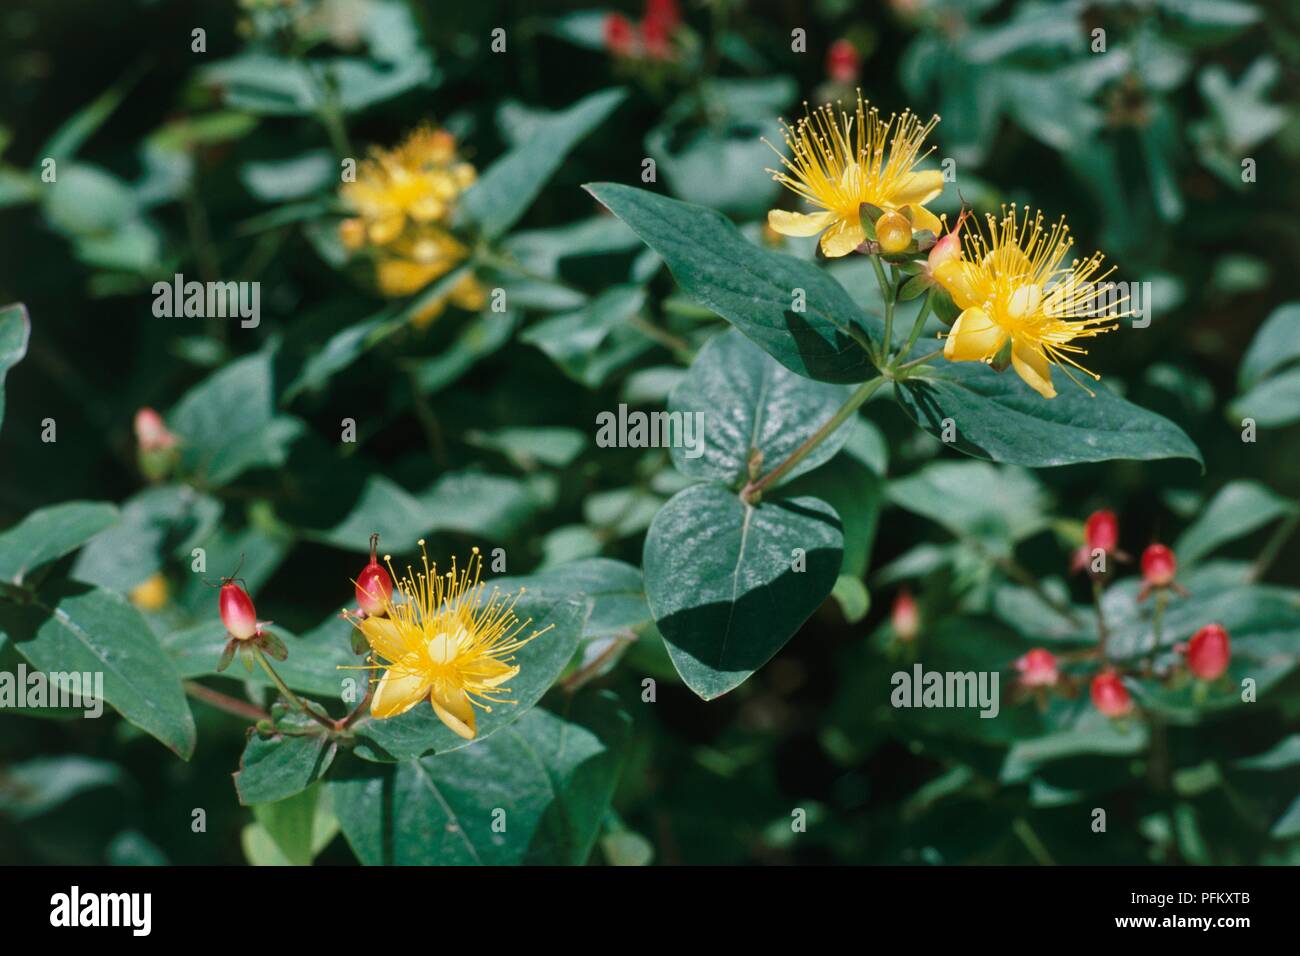 Hypericum x inodorum 'Elstead', shrub with small, yellow flowers, red buds, and dark green leaves Stock Photo